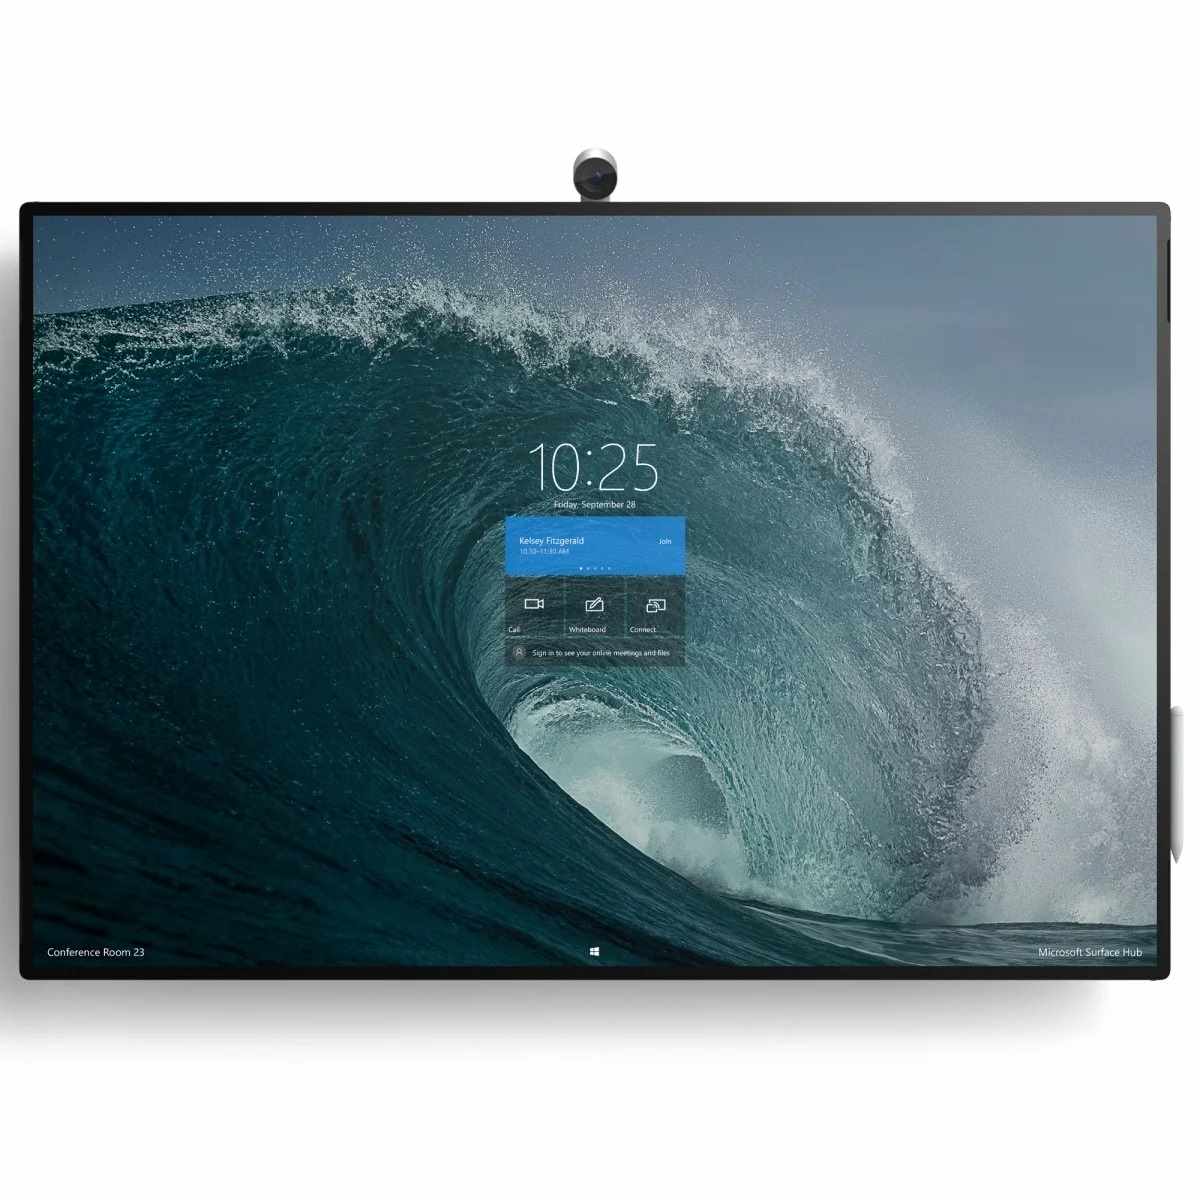 Microsoft Surface Hub 2S0 